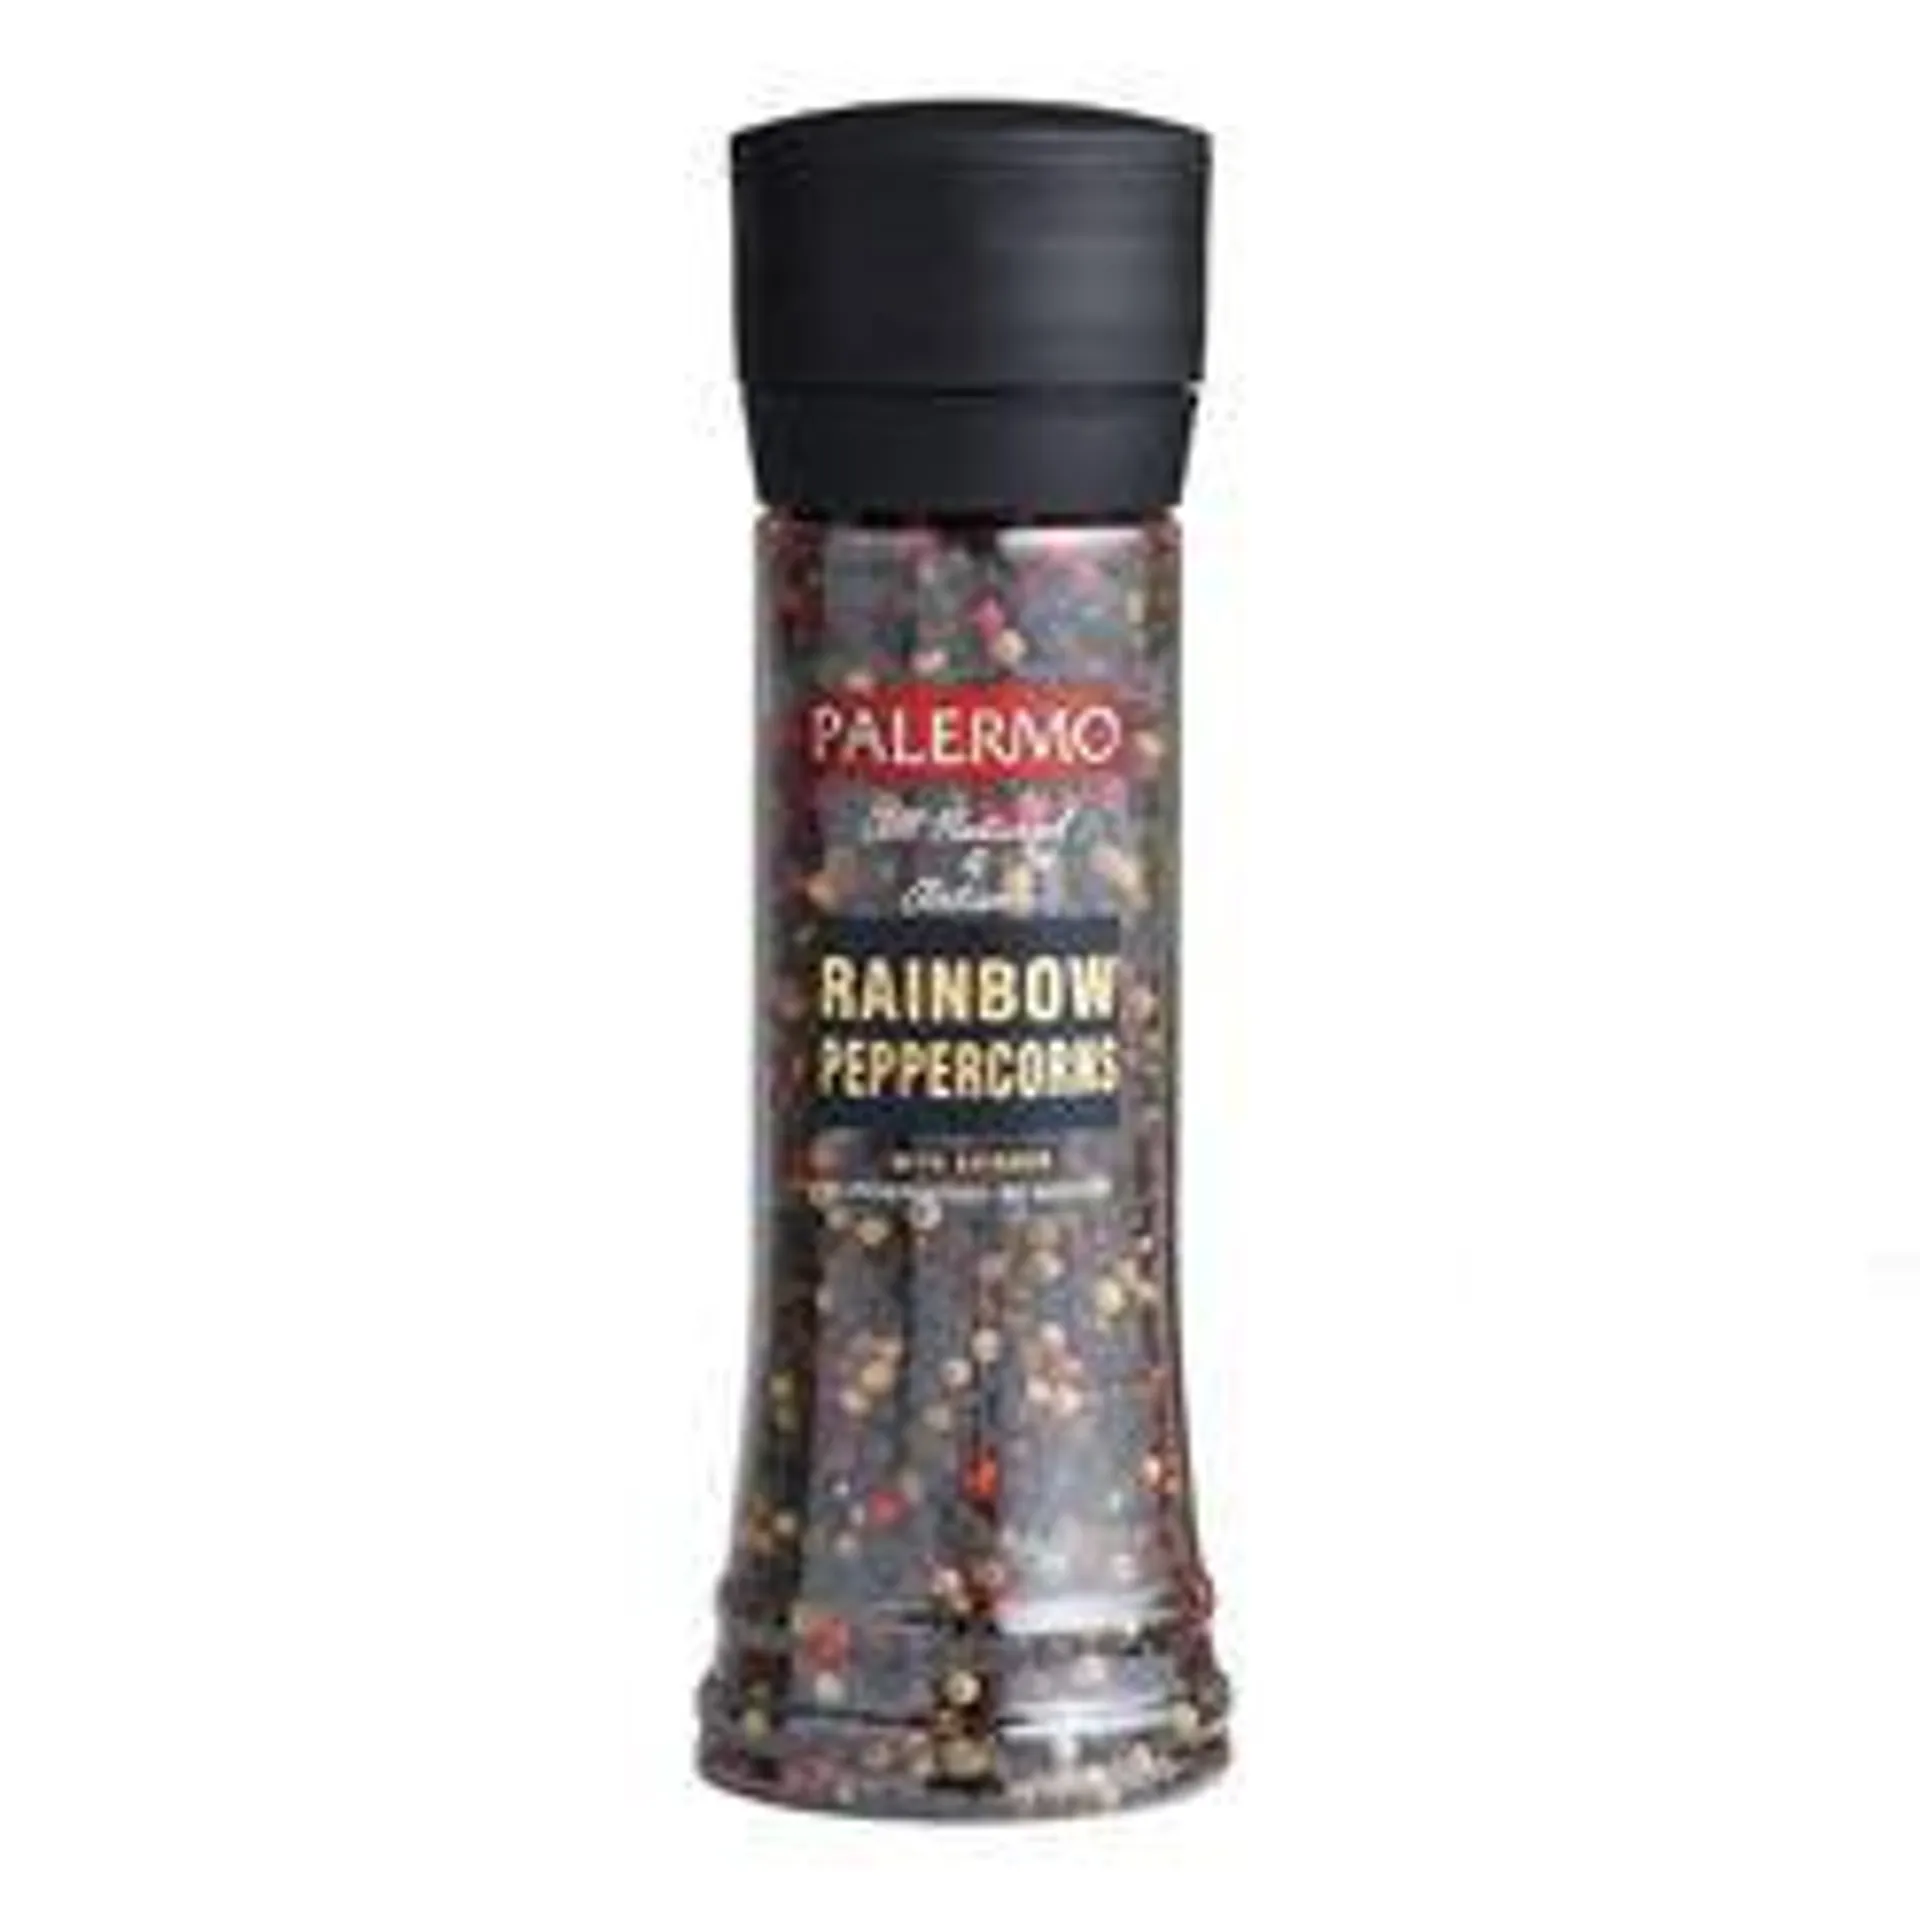 Palermo Rainbow Peppercorn Grinder